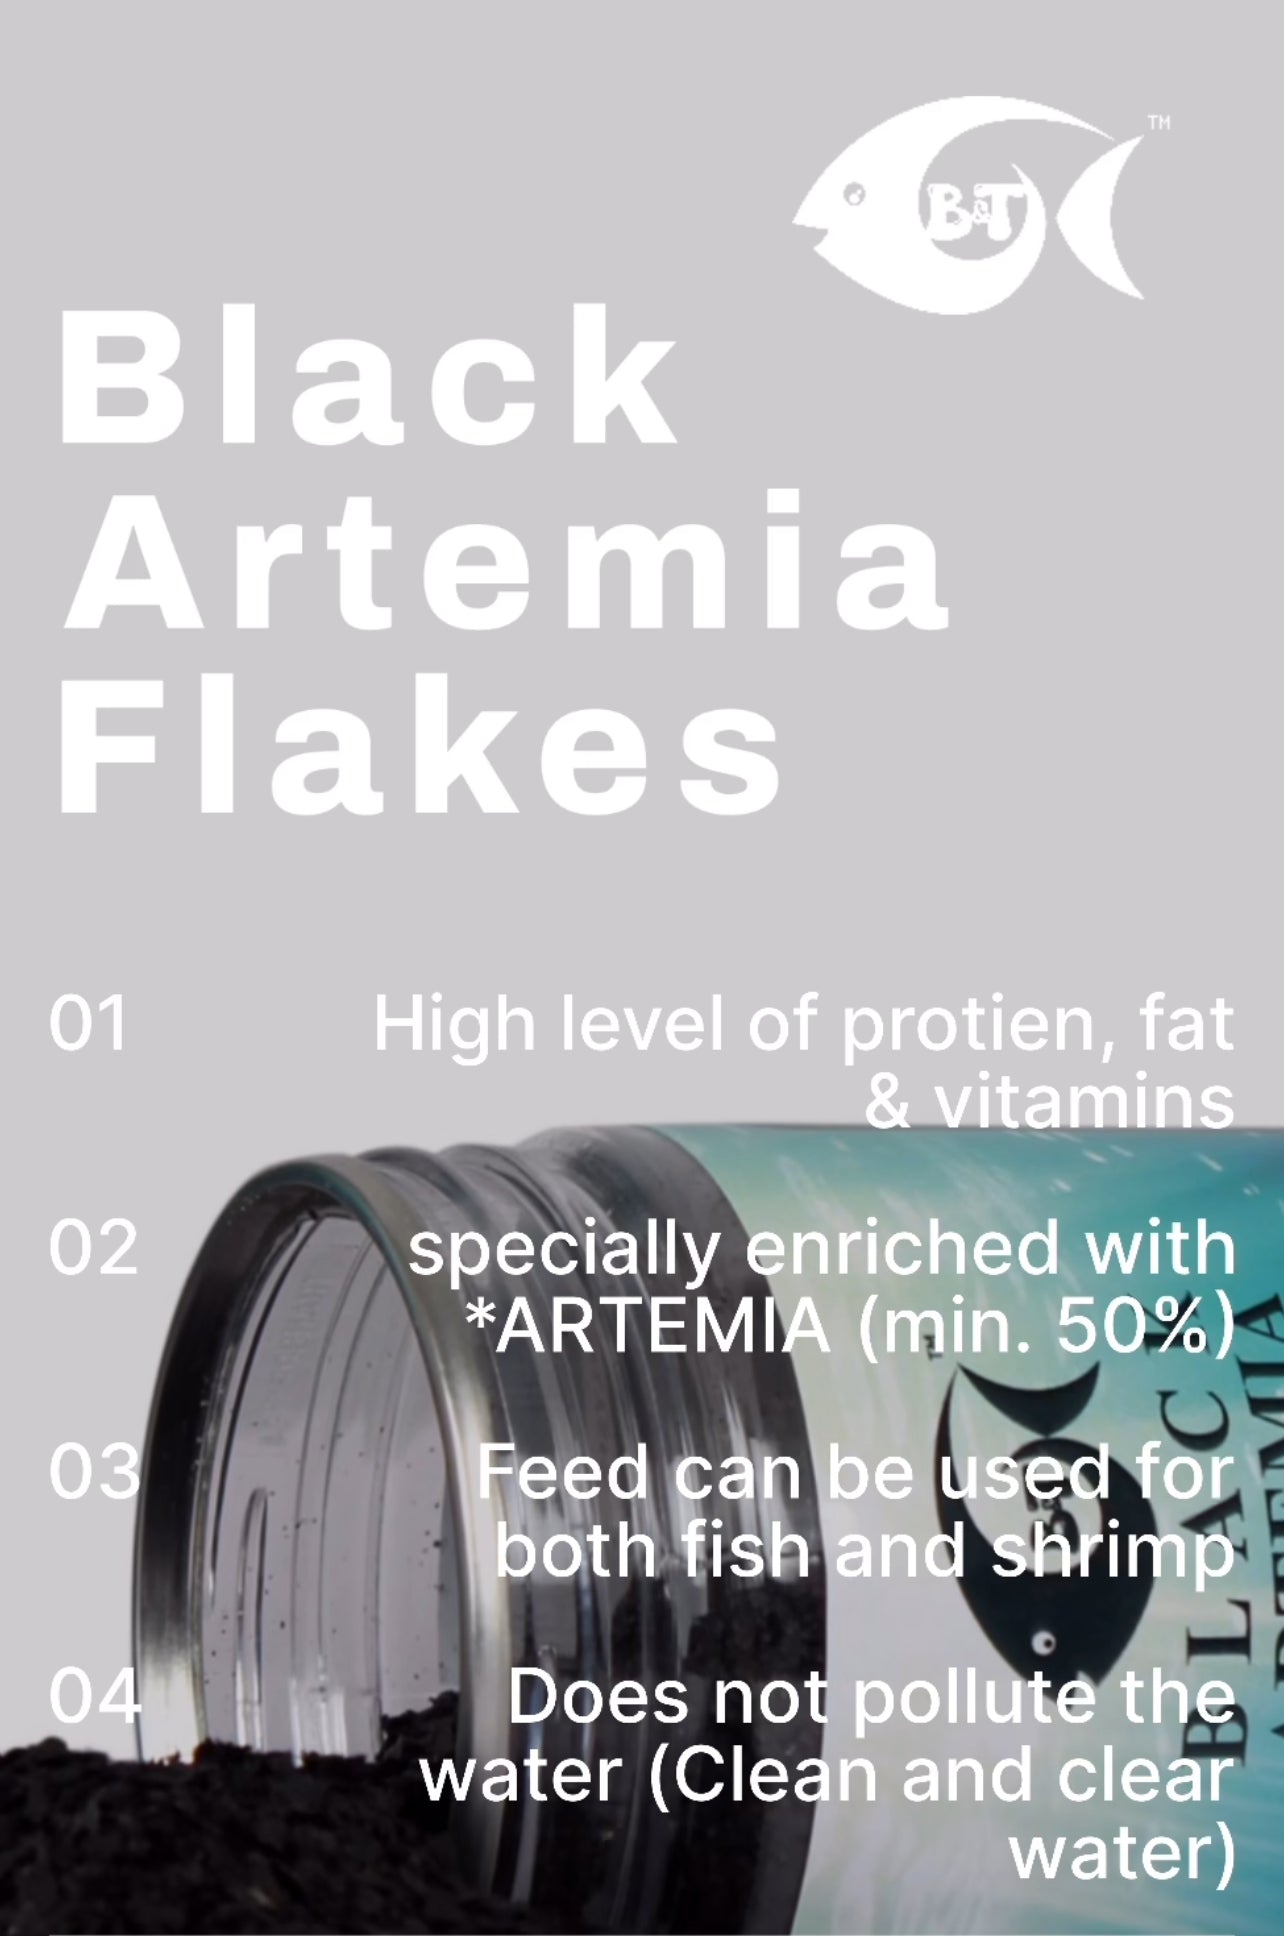 B&T Black Artemia flakes 52gm